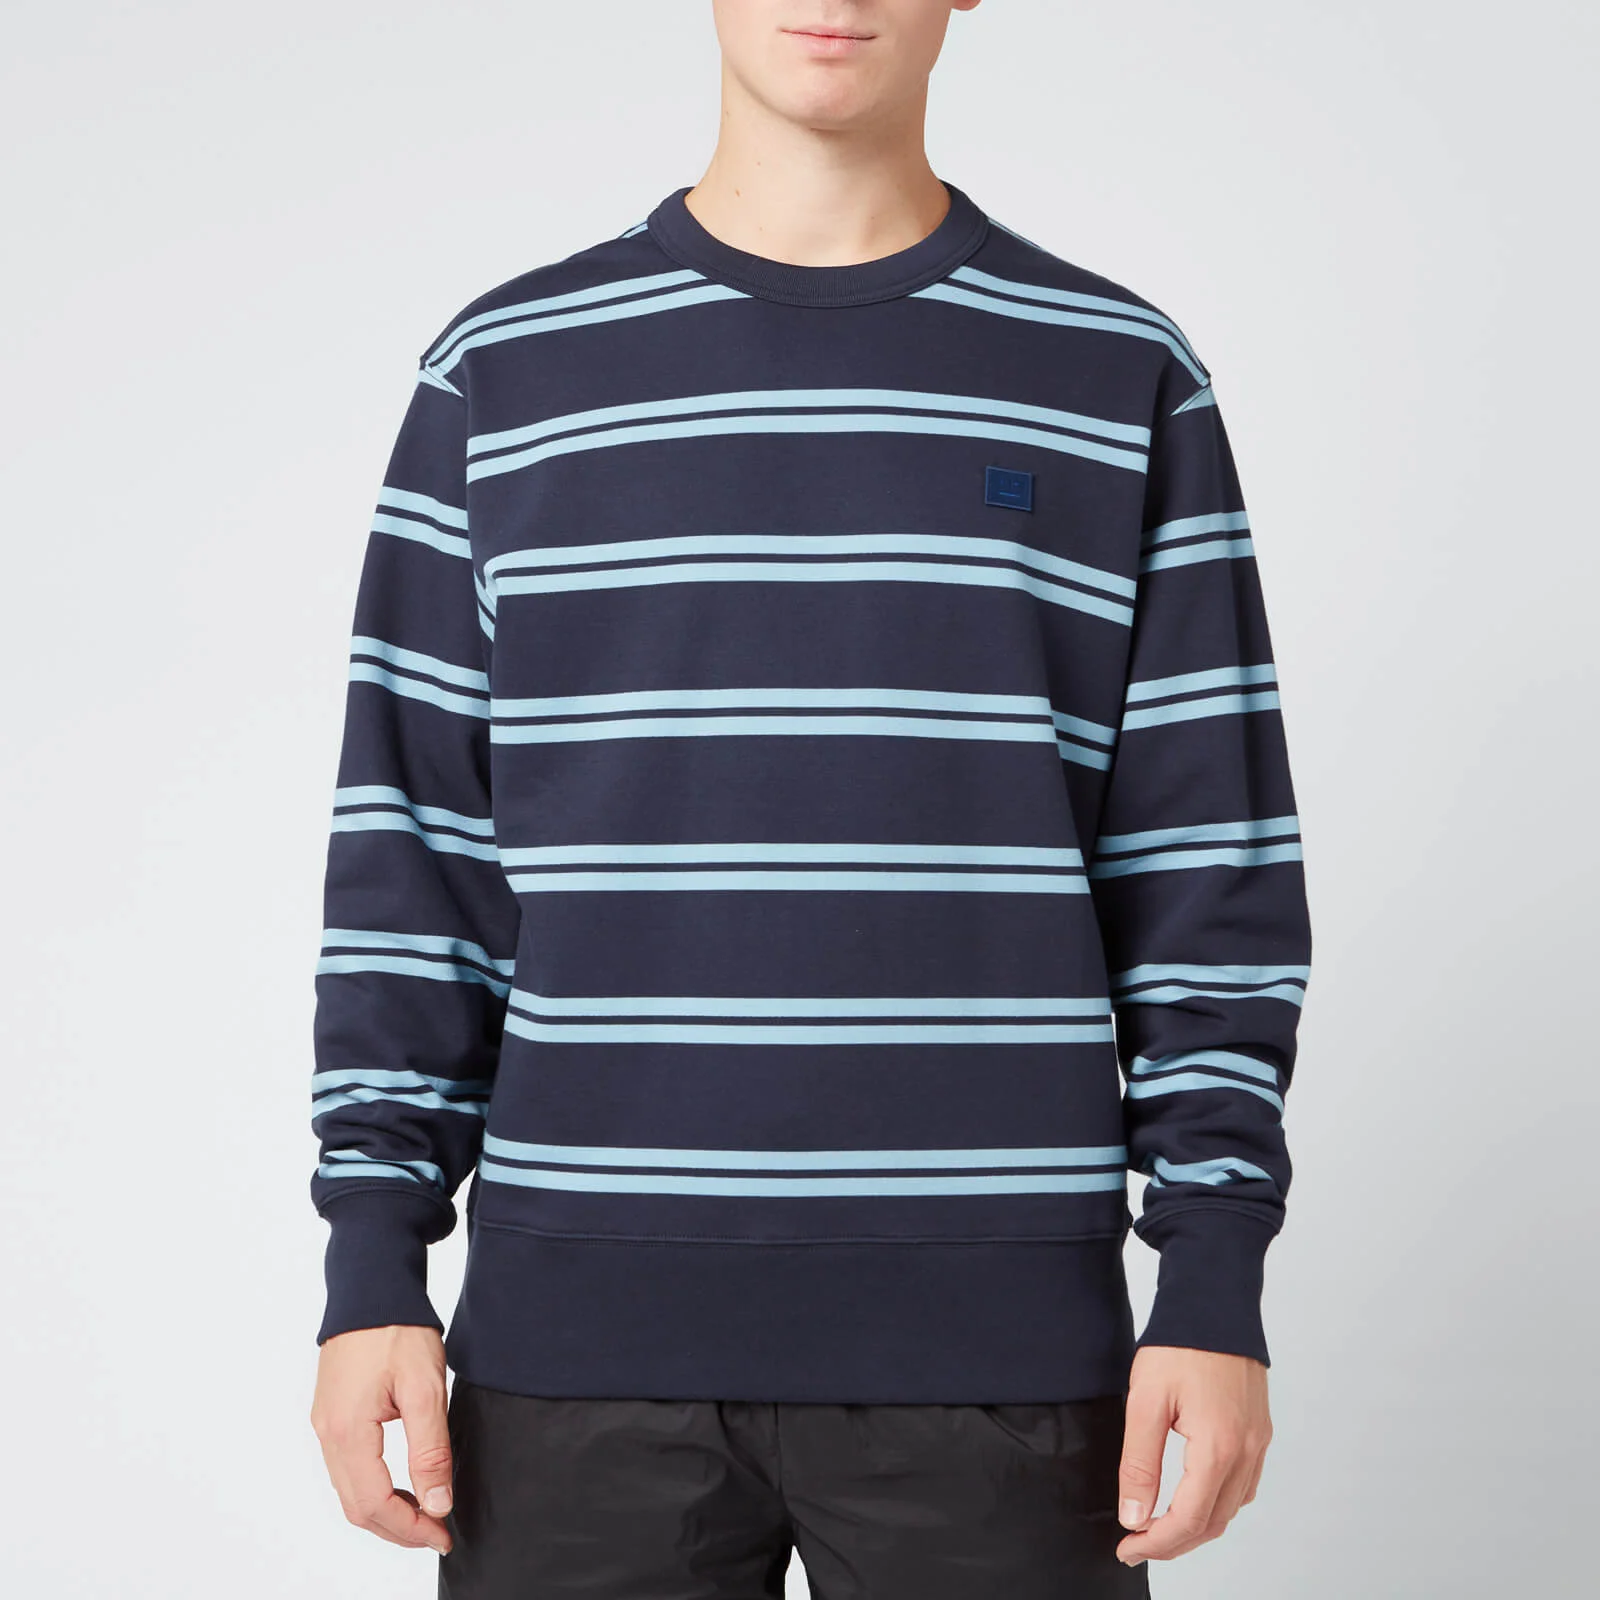 Acne Studios Men's Striped Face Sweatshirt - Navy Blue Image 1